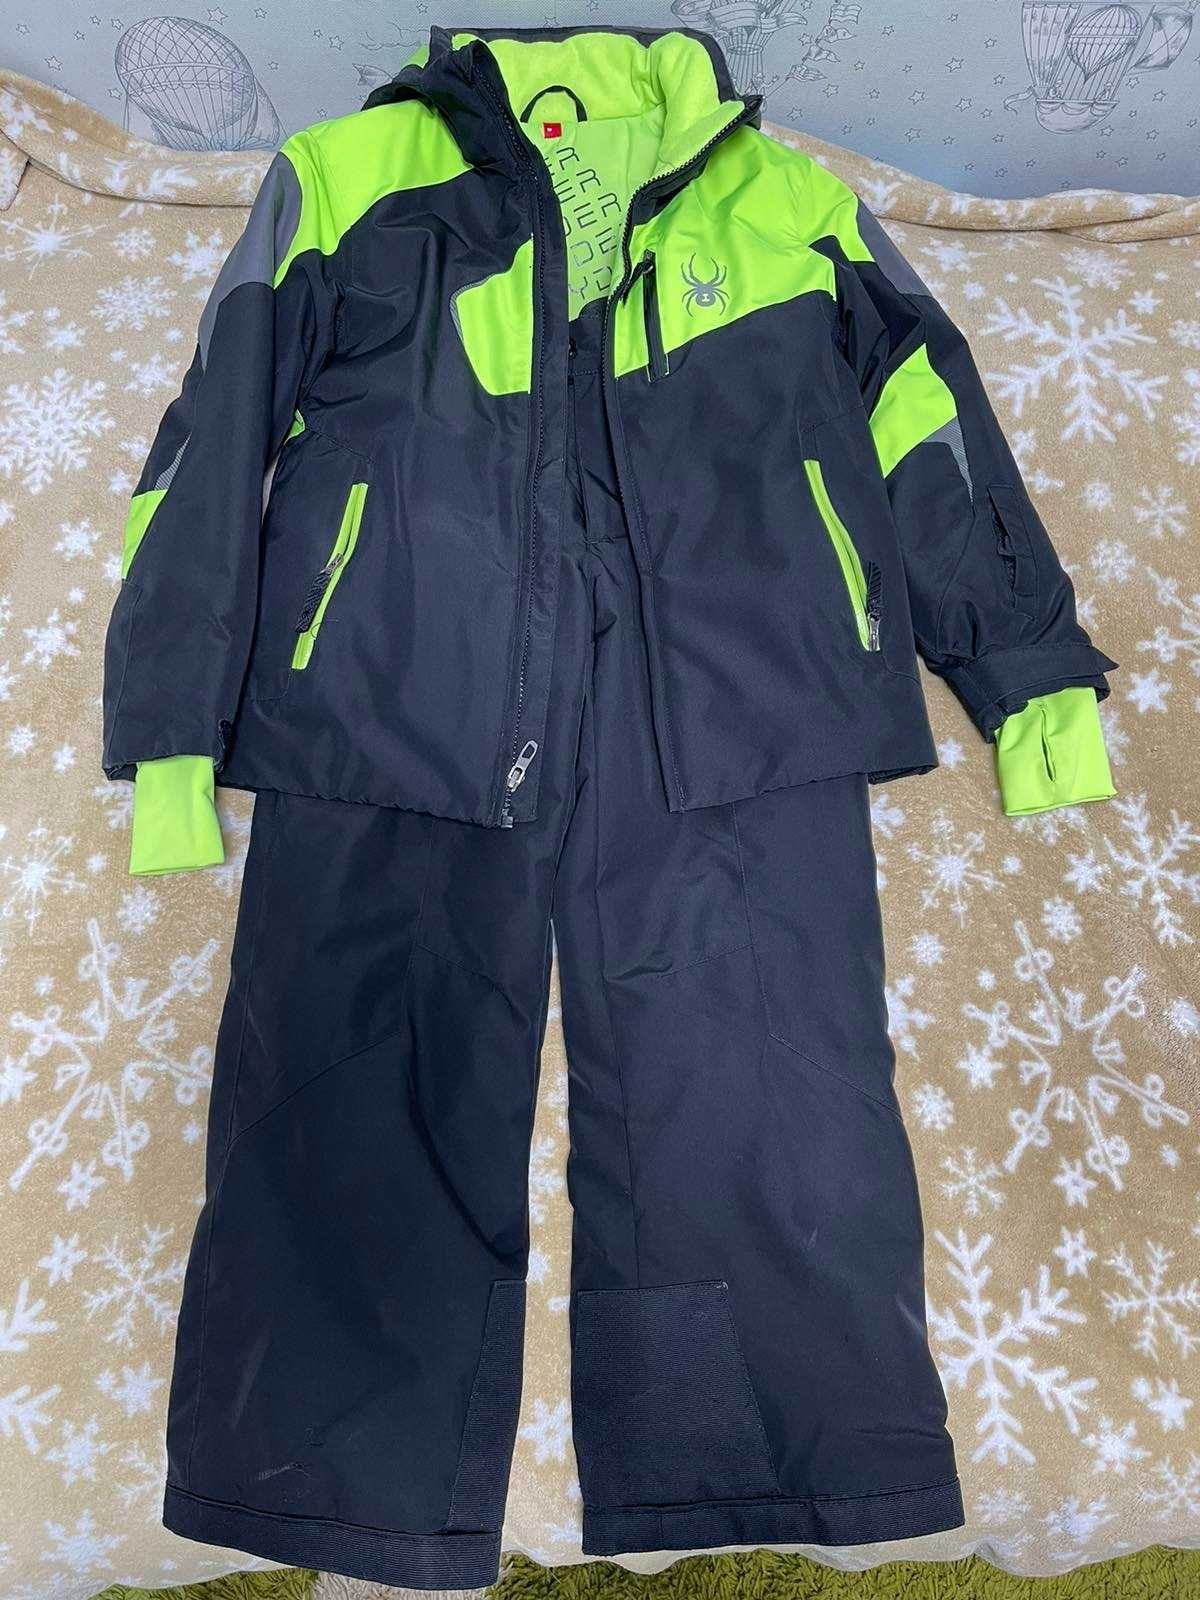 Лыжный костюм (куртка, штаны) Spyder рост 128-136 размер 8 горнолыжный